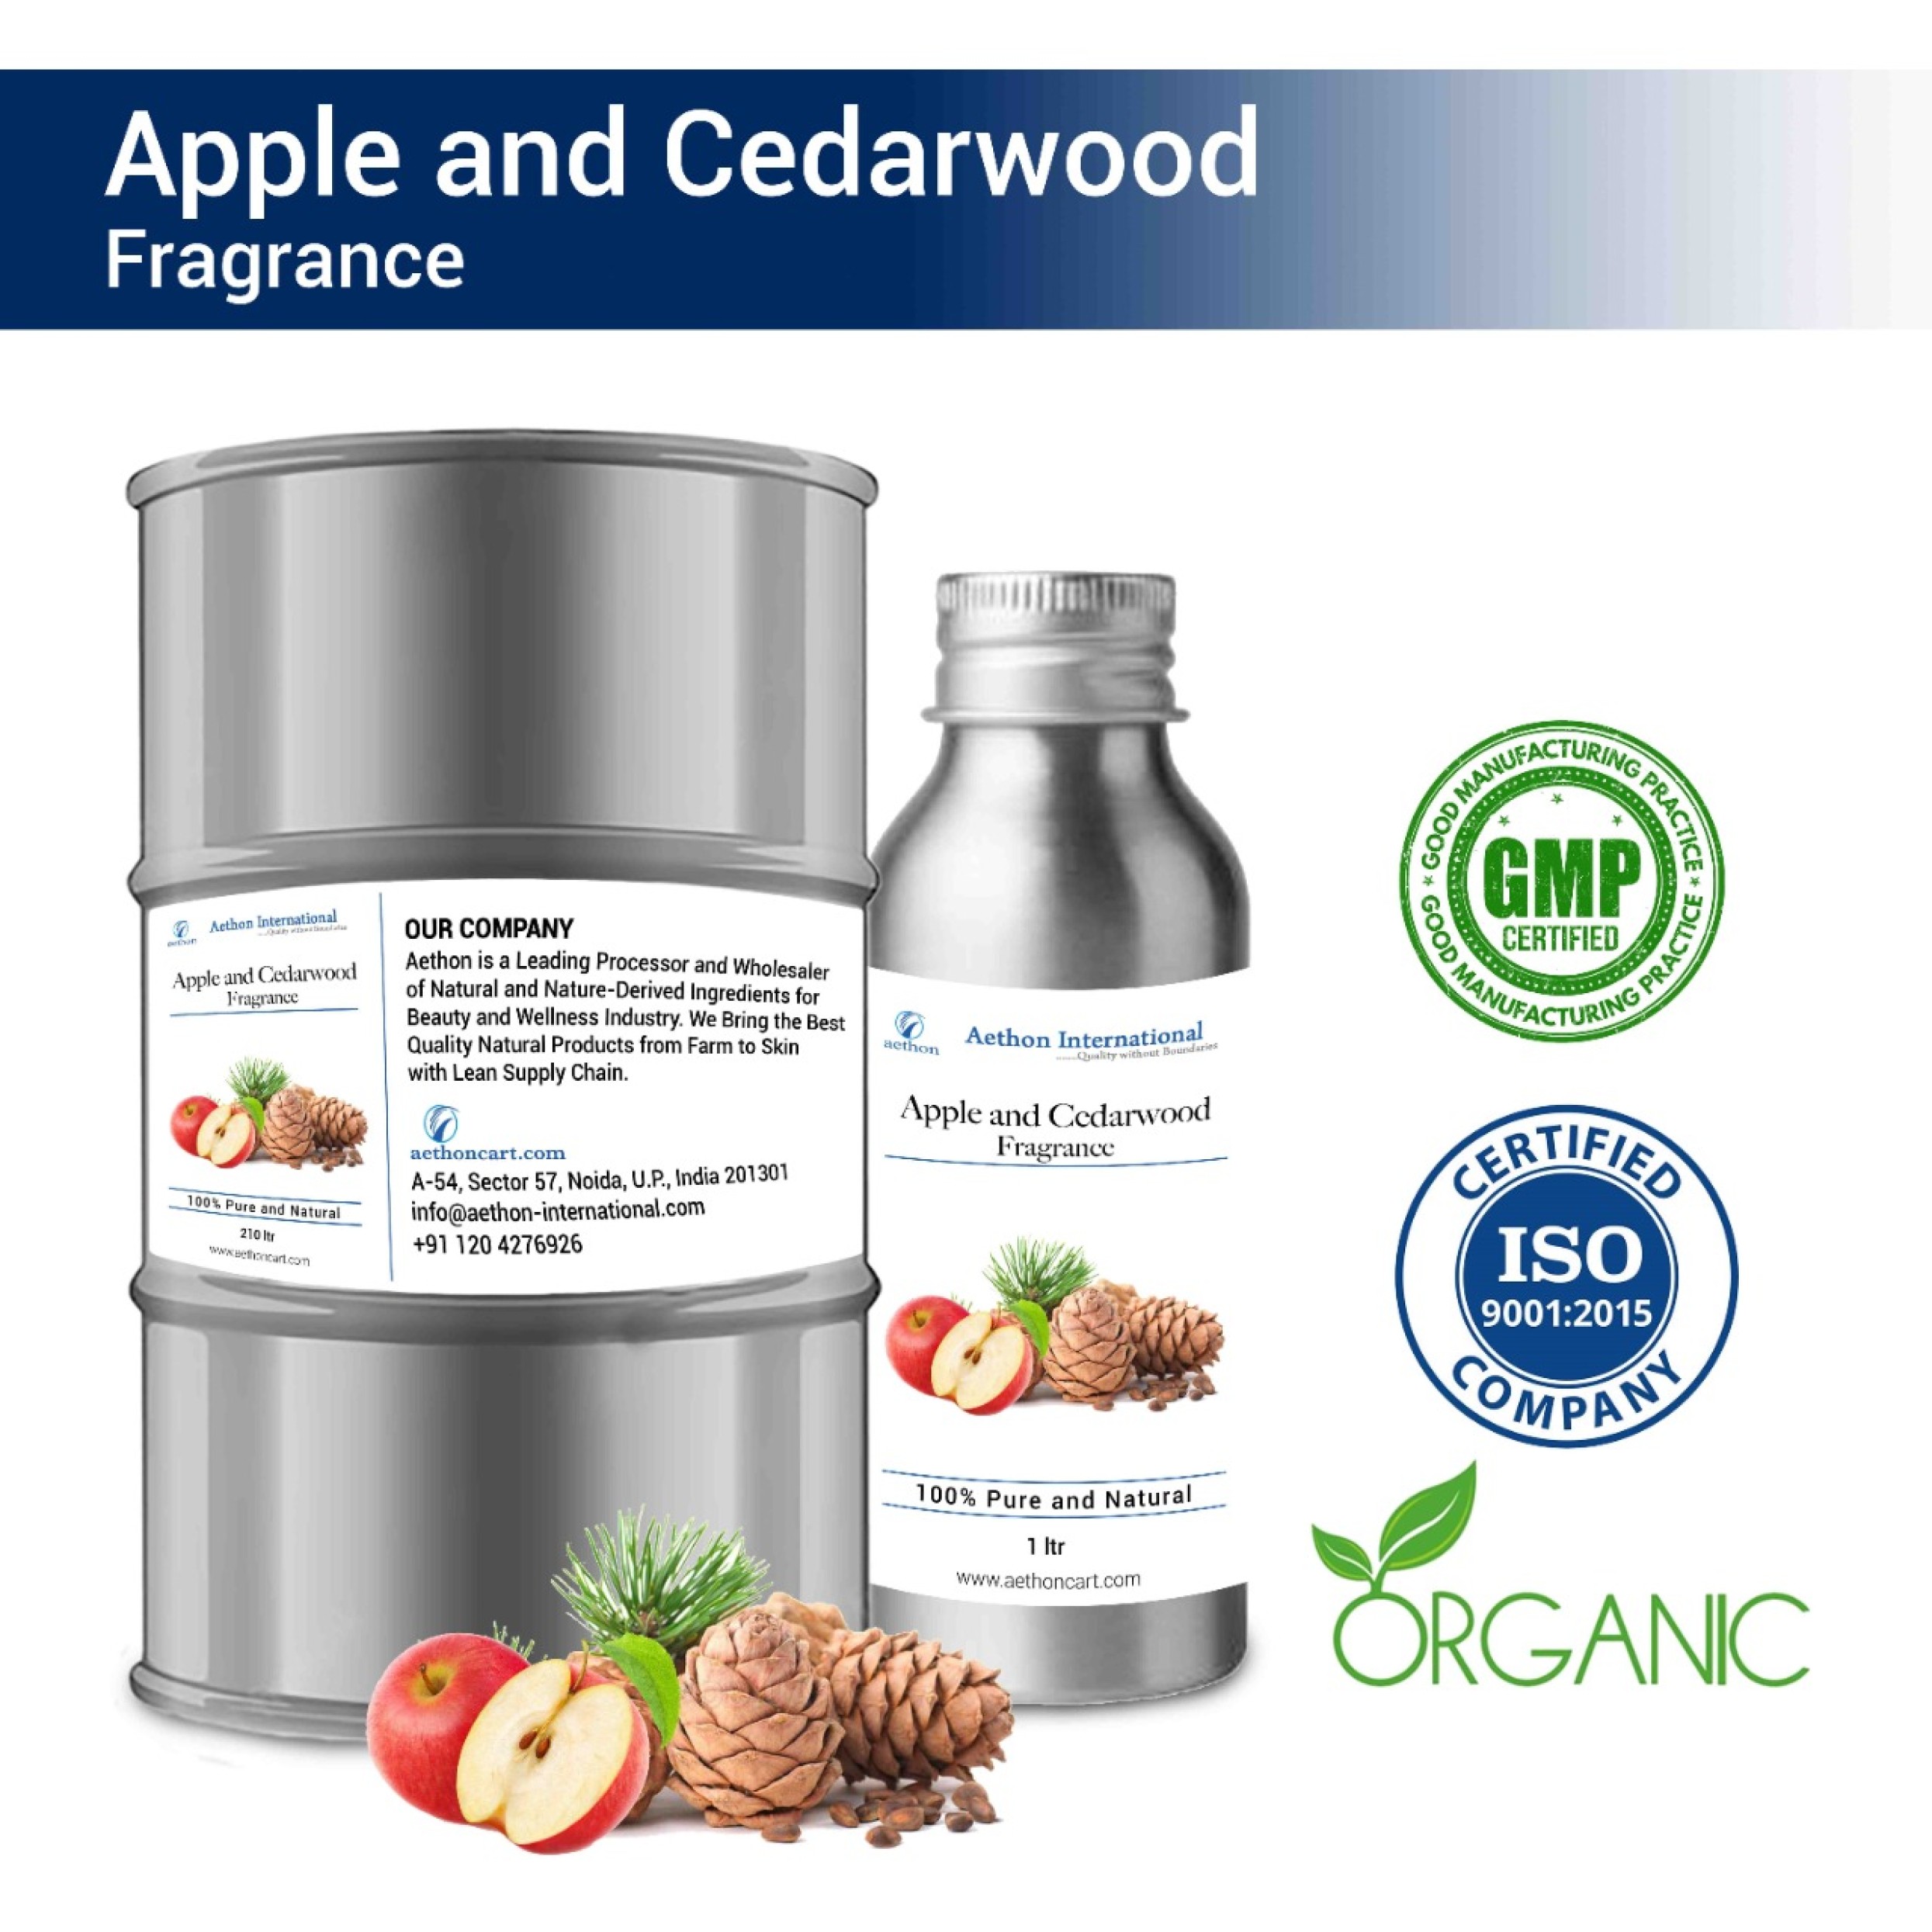 Apple and Cedarwood Fragrance